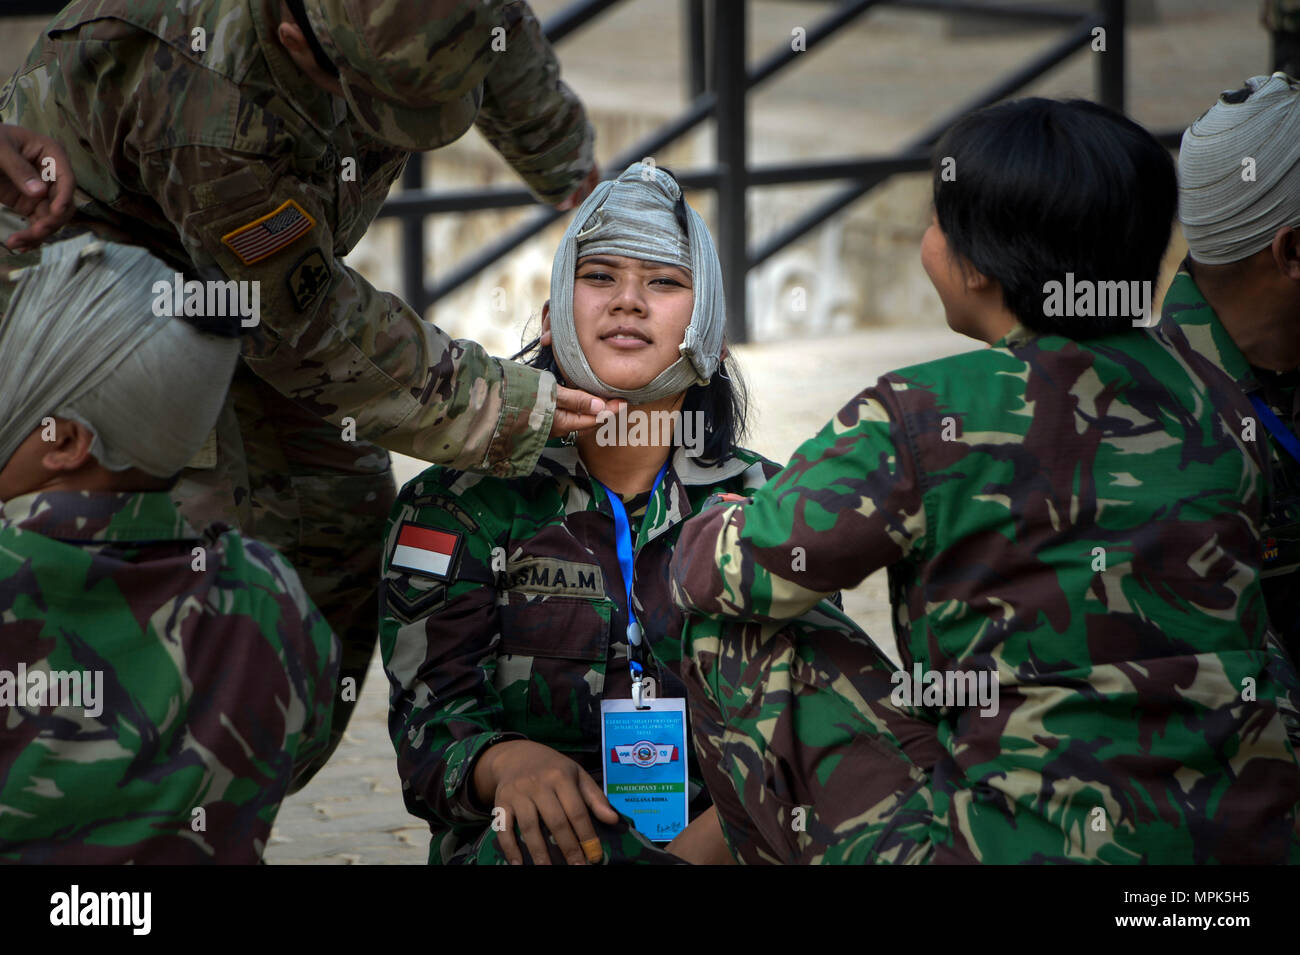 US army Jacket, Army Jacket in Nepal